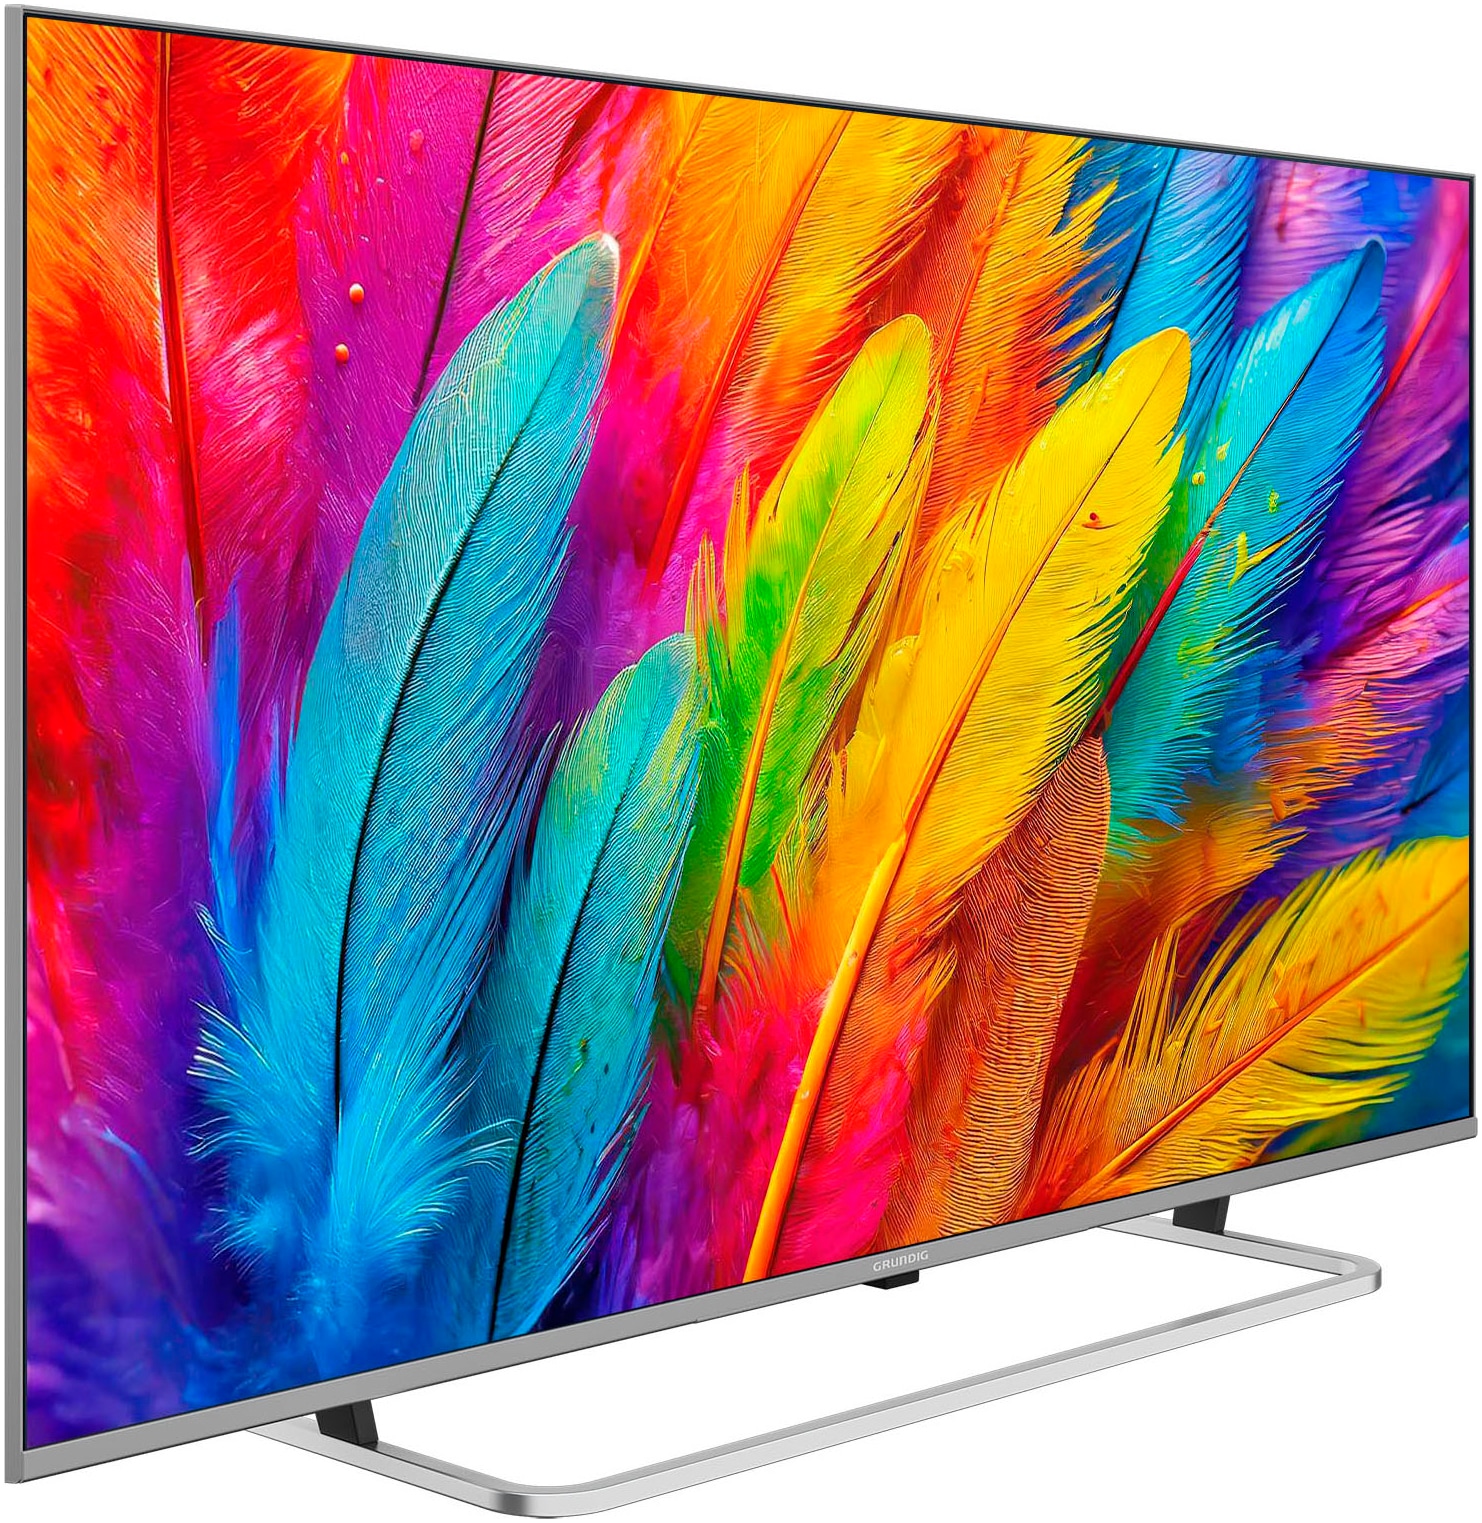 Grundig LED-Fernseher »75 VOE 83 CV4T00«, 189 cm/75 Zoll, 4K Ultra HD, Google TV-Smart-TV